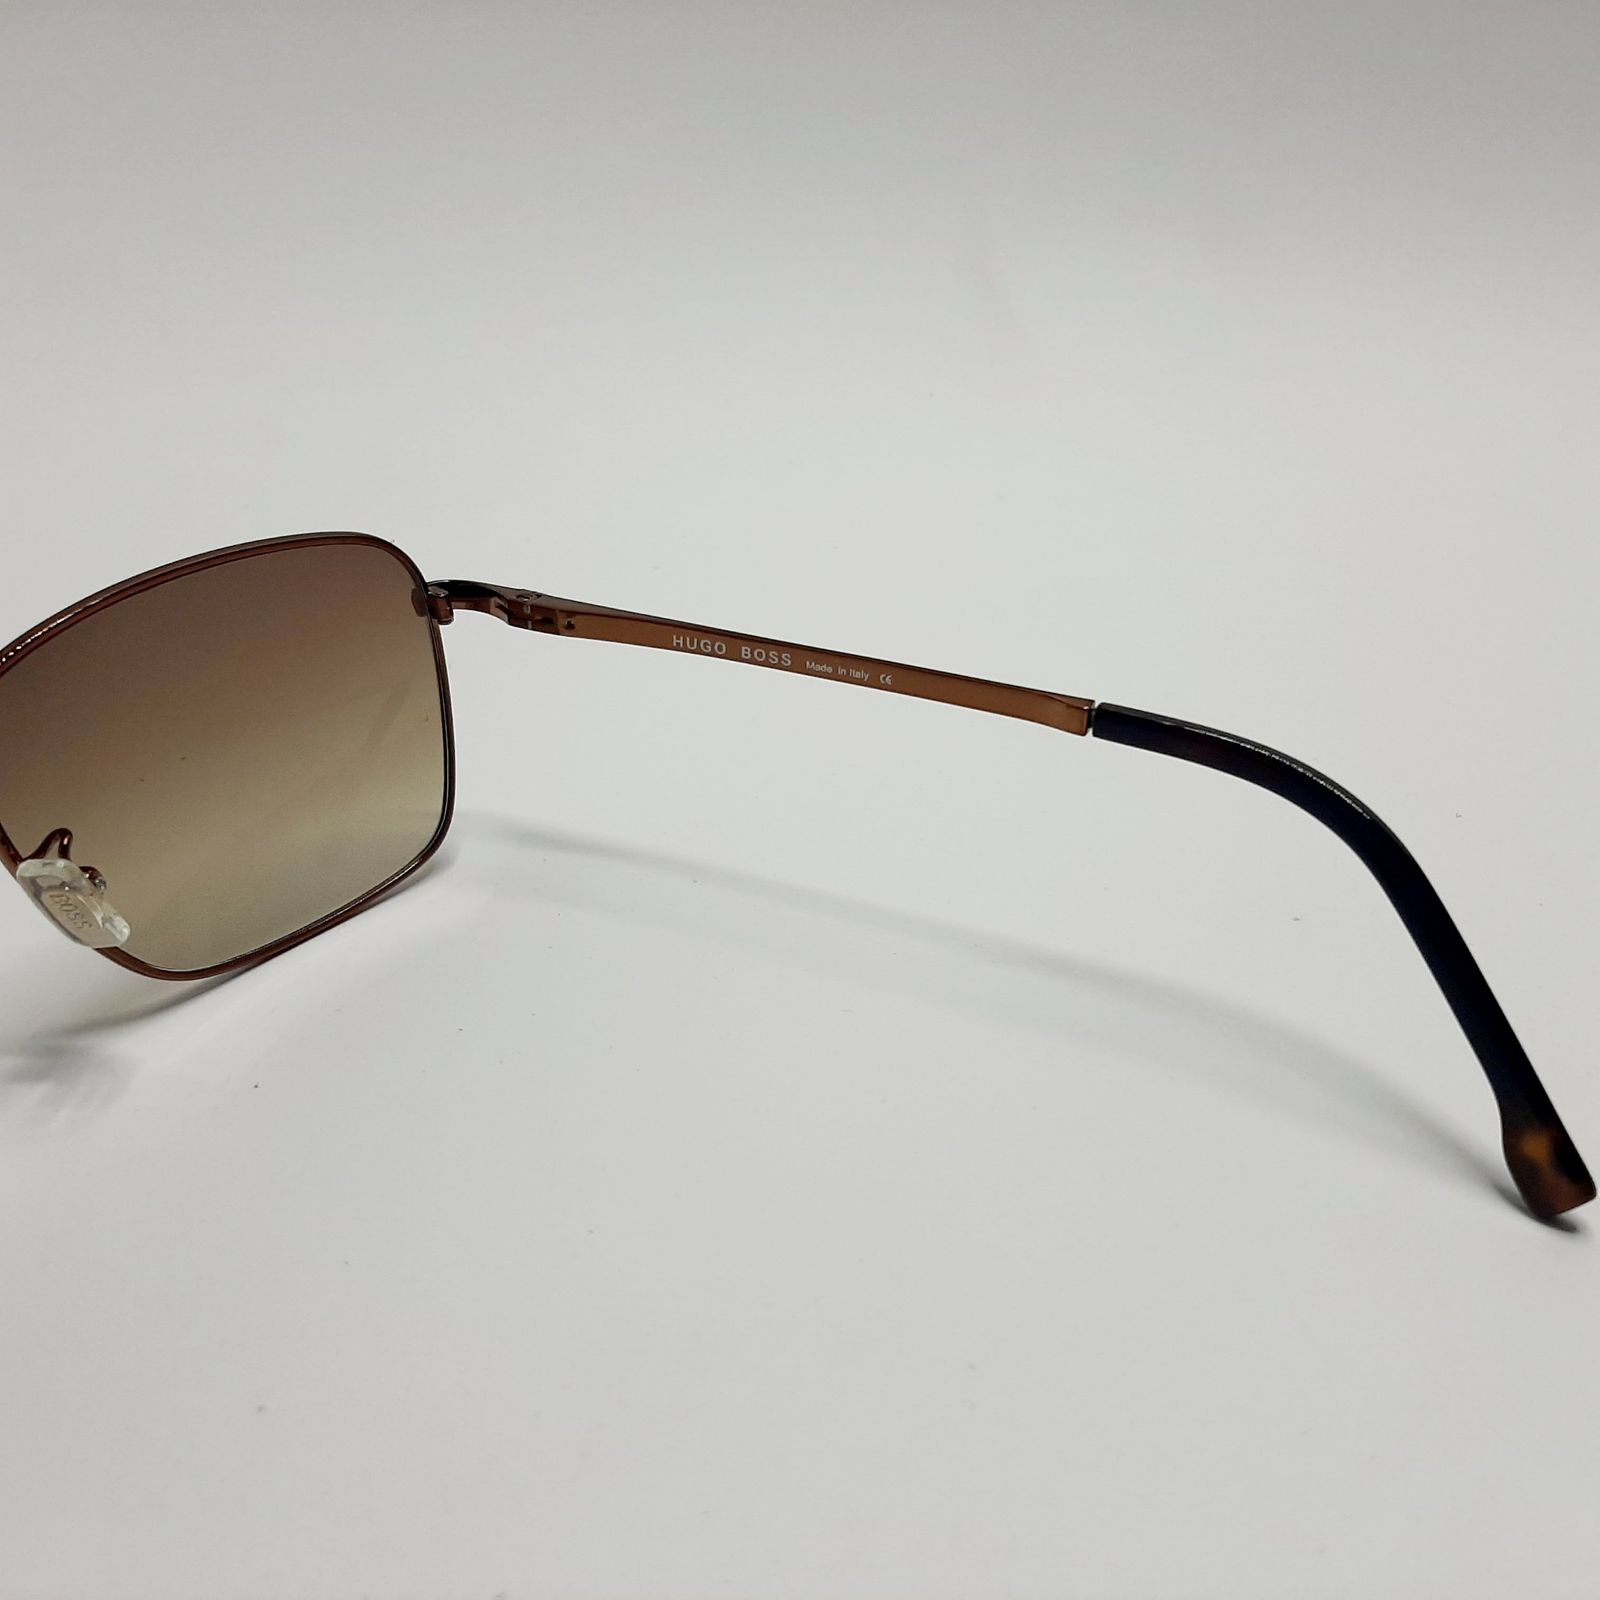 عینک آفتابی هوگو باس مدل HB1068c5 -  - 7